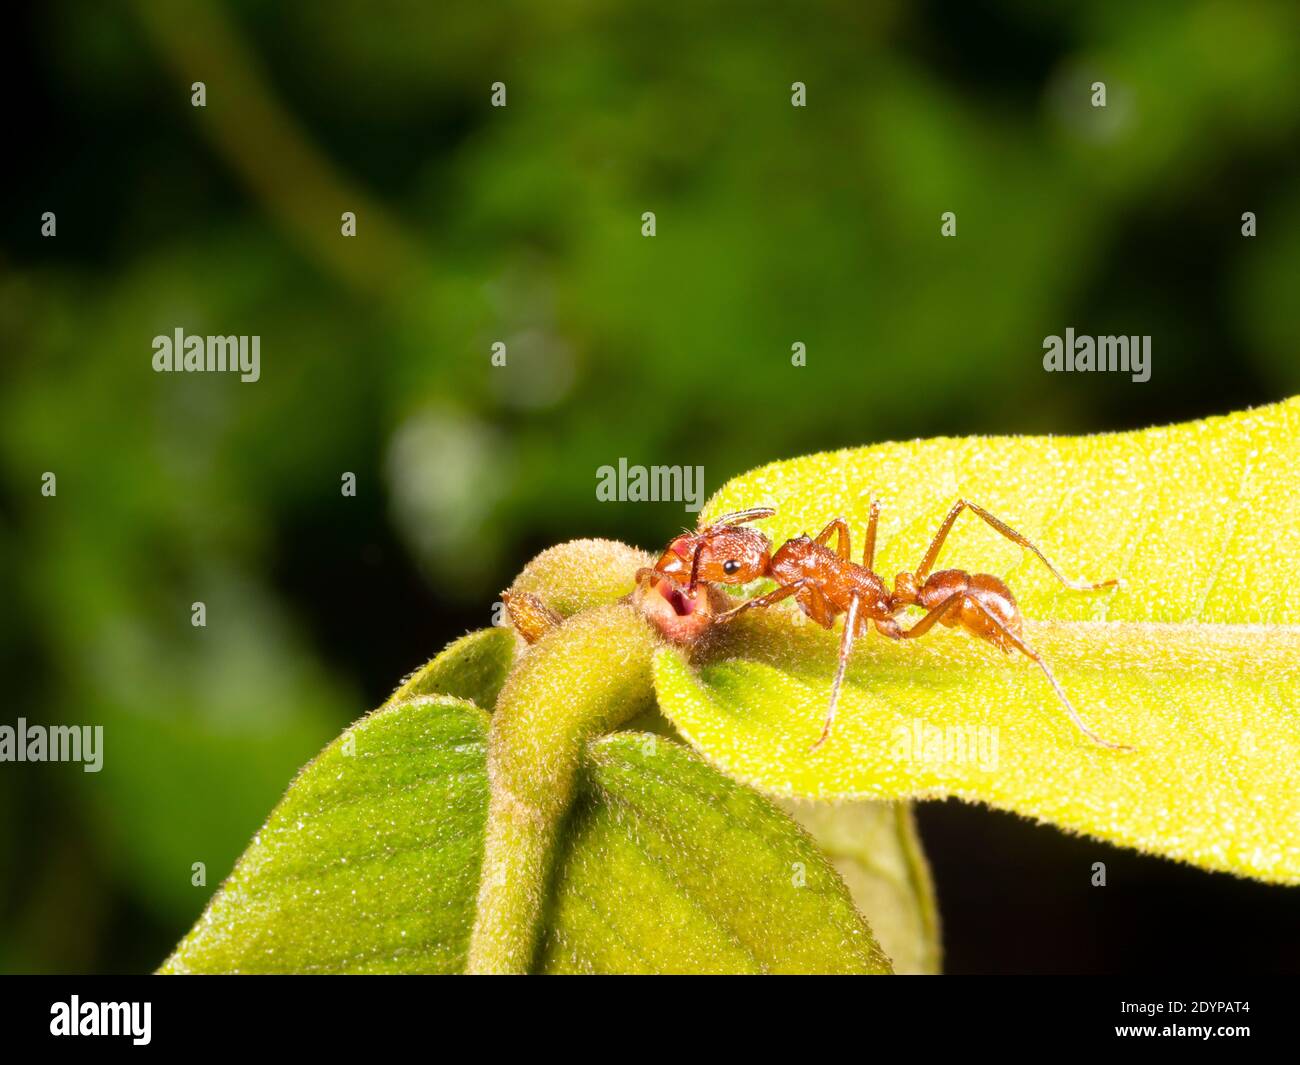 Large Amazonian ant (Ectatomma tuberculatum) gathering nectar from extra-floral nectaries on a leaf Stock Photo